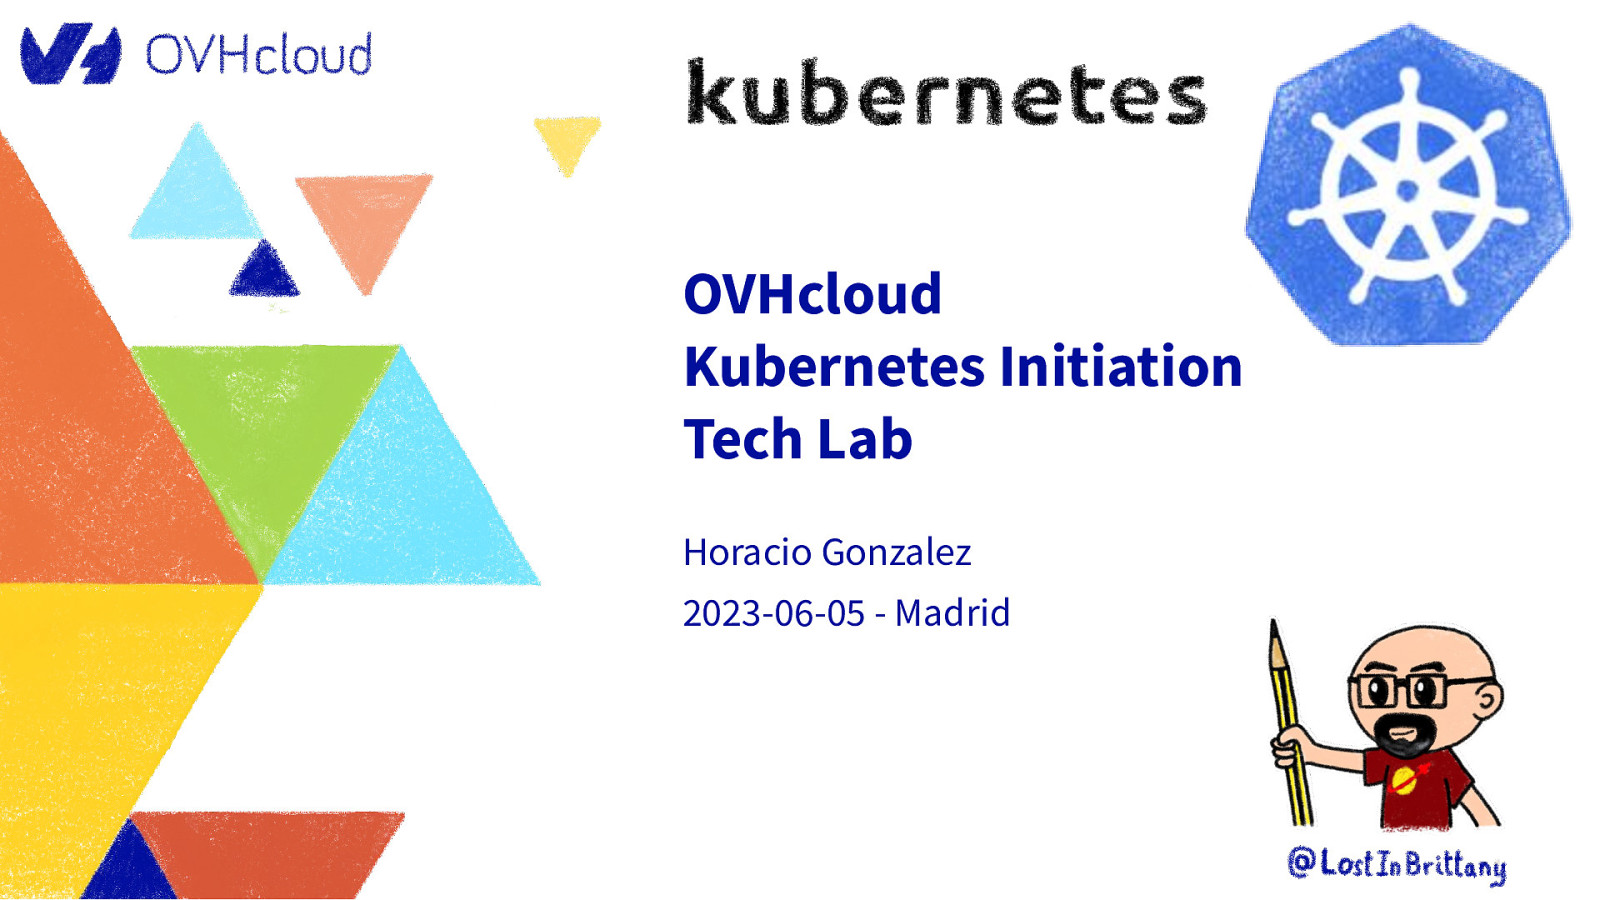 OVHcloud Kubernetes Tech Lab Spain